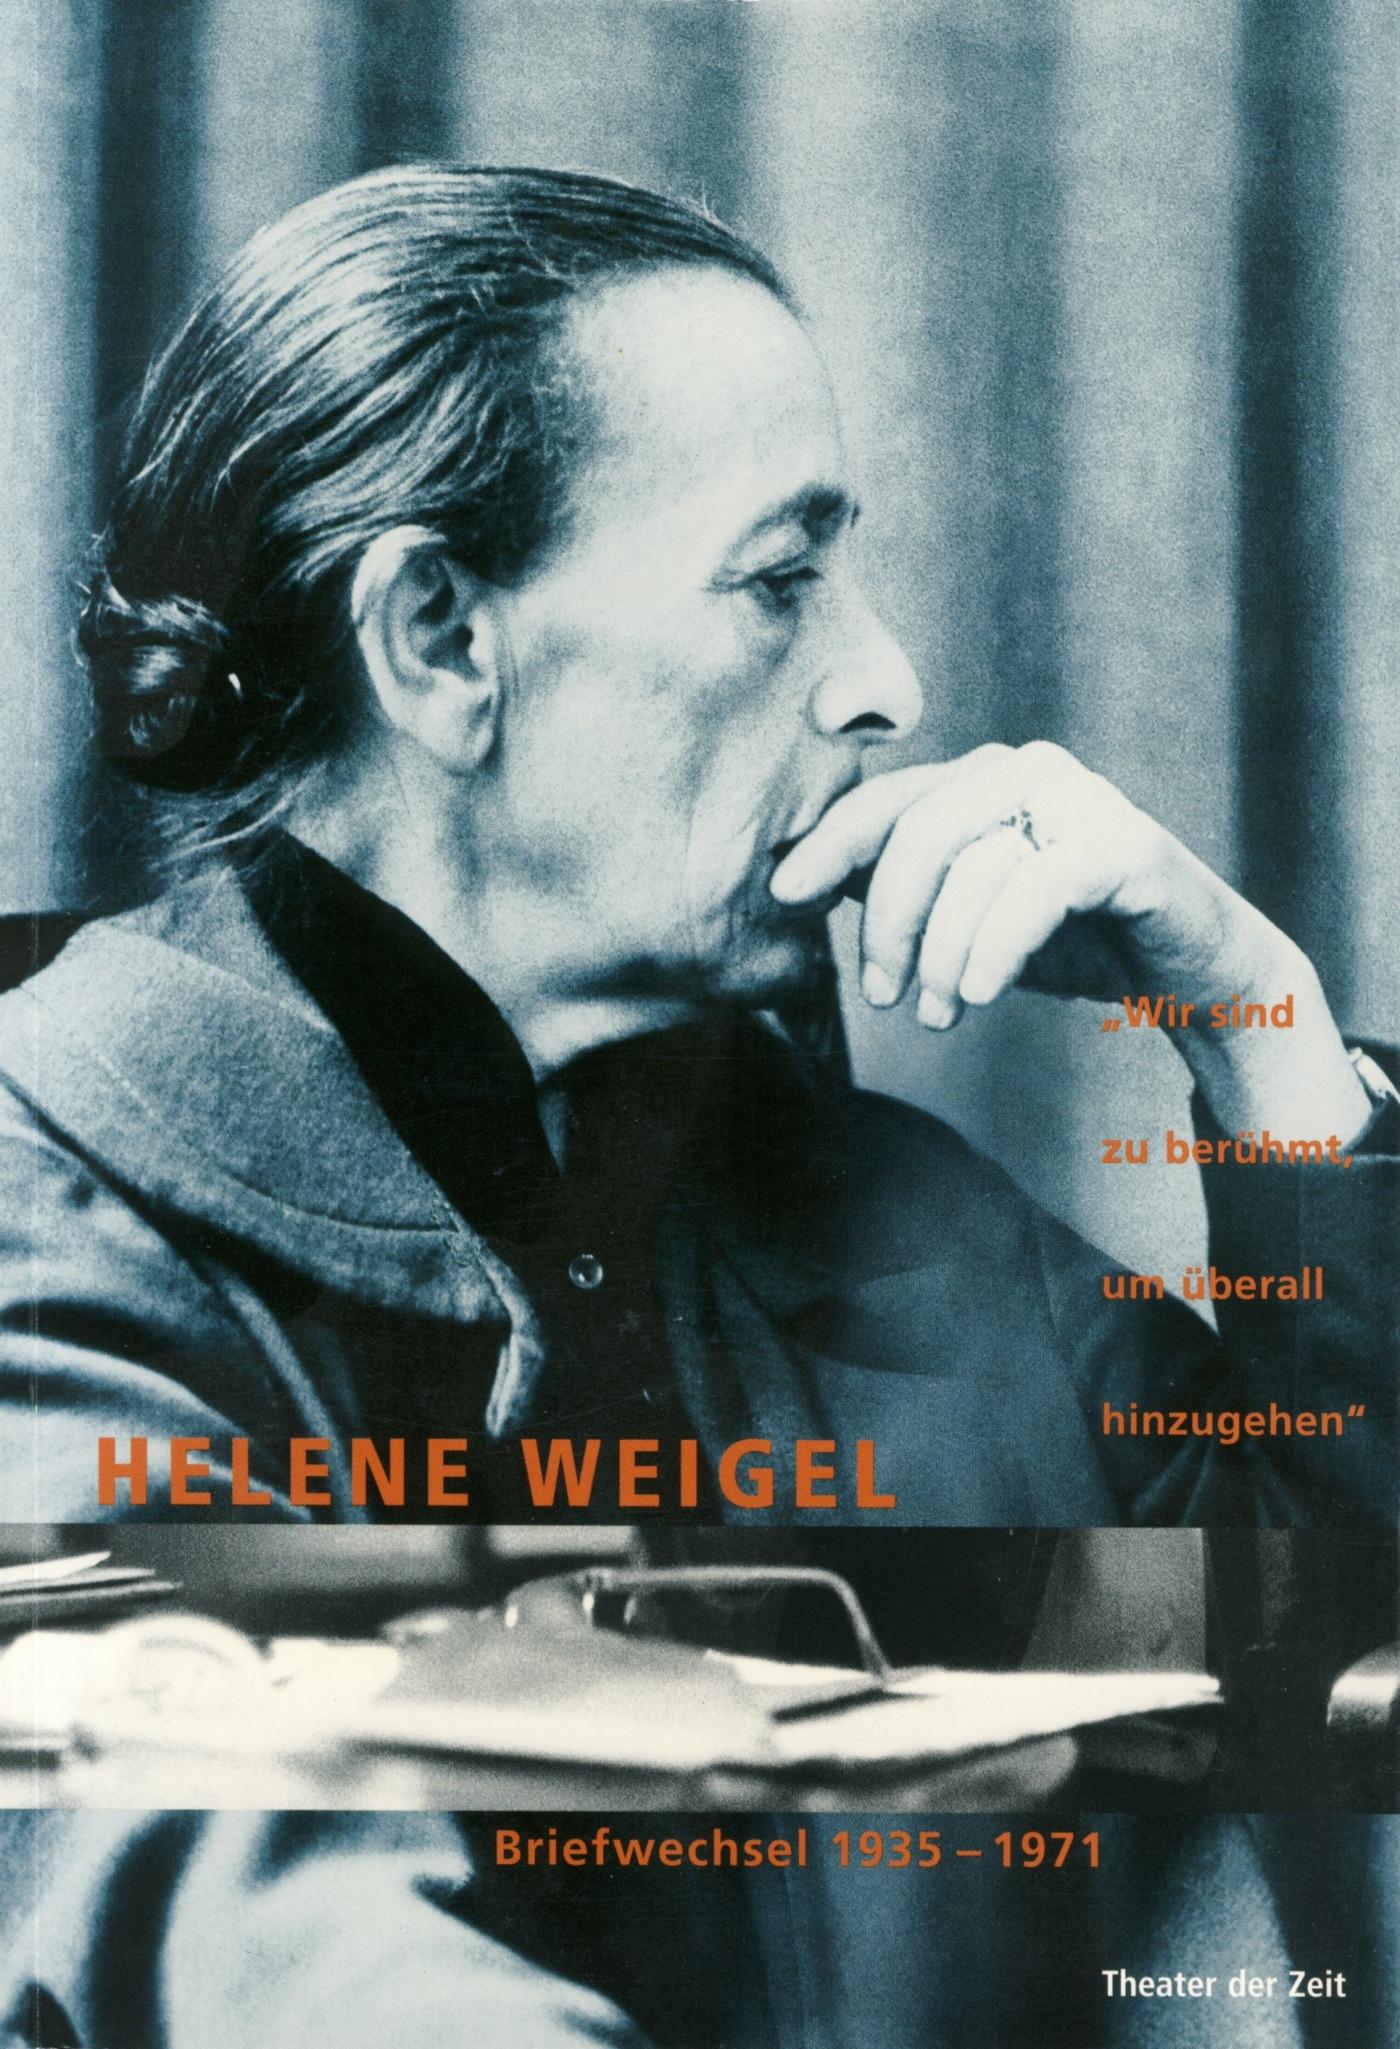 "Helene Weigel Briefwechsel"